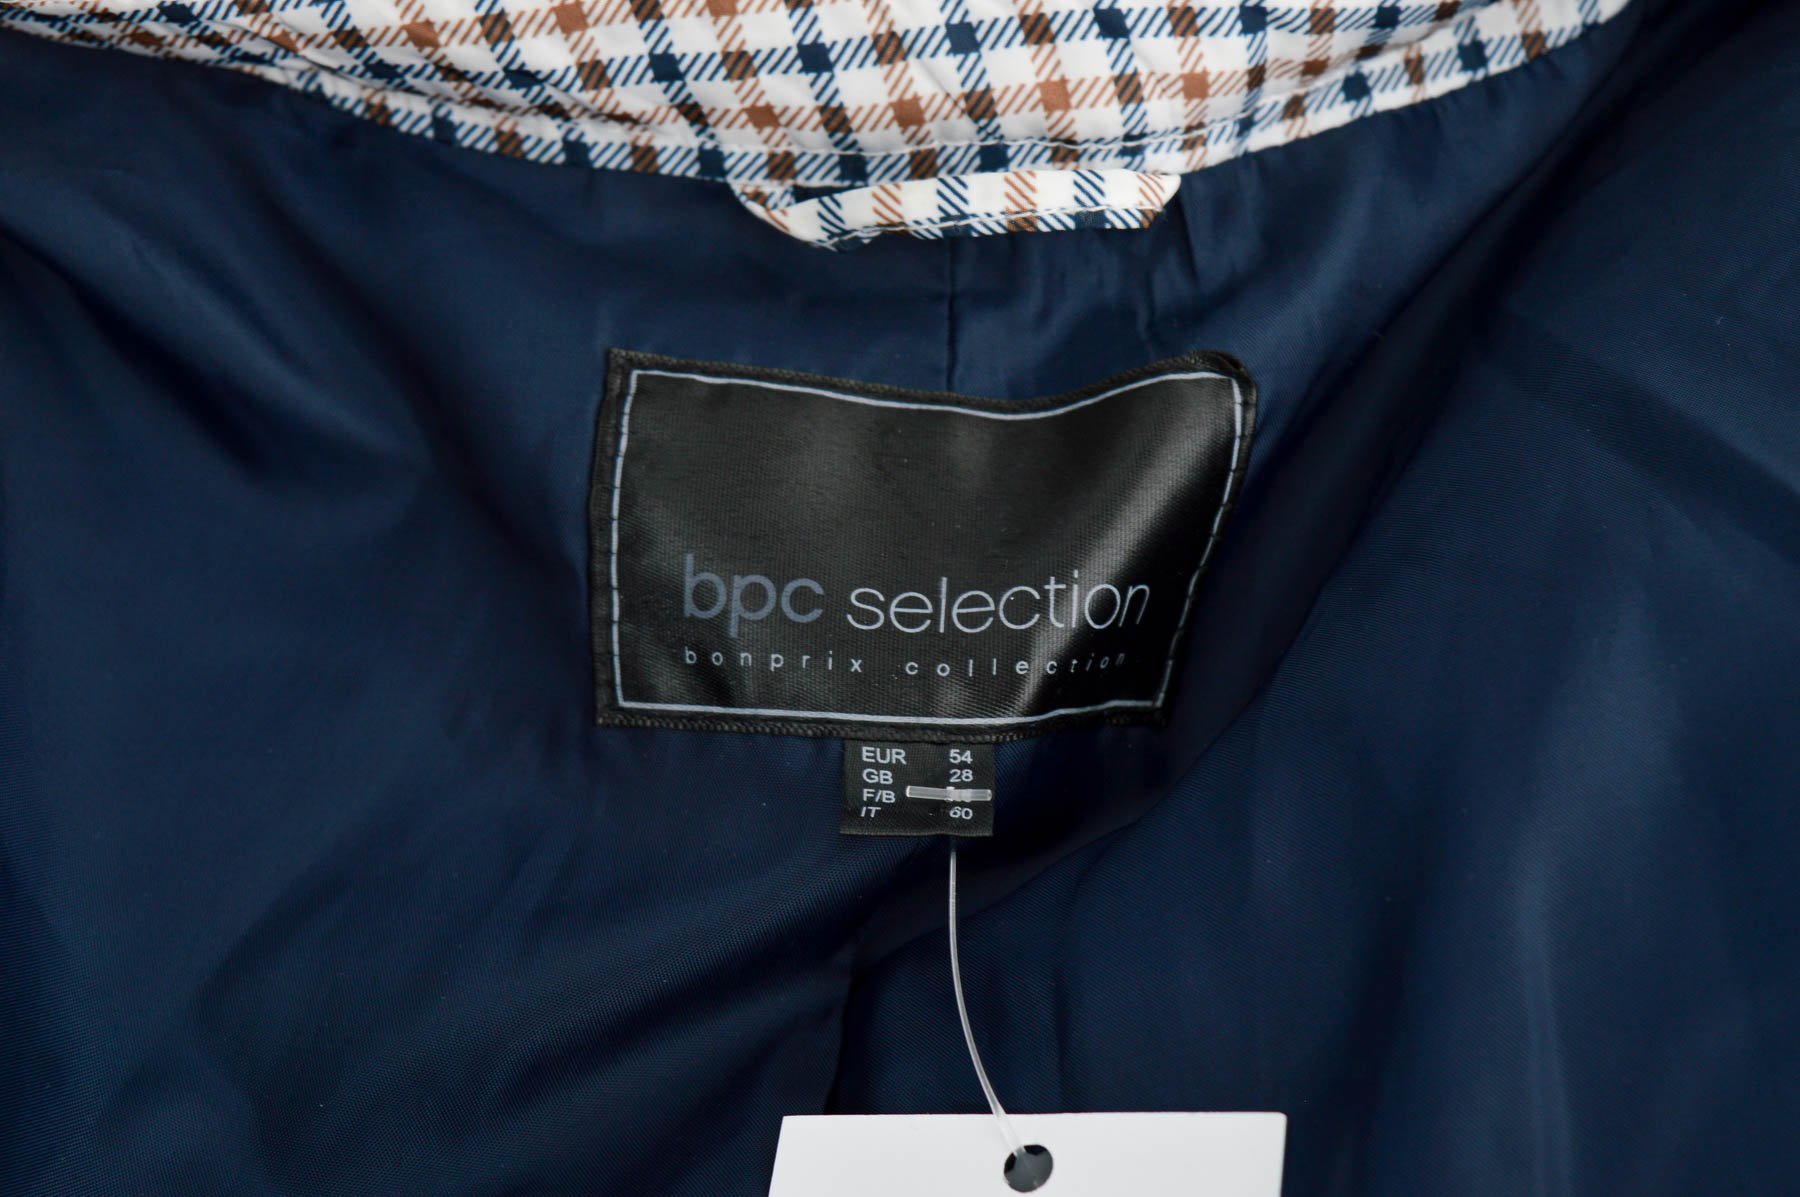 Female jacket - Bpc selection bonprix collection - 2